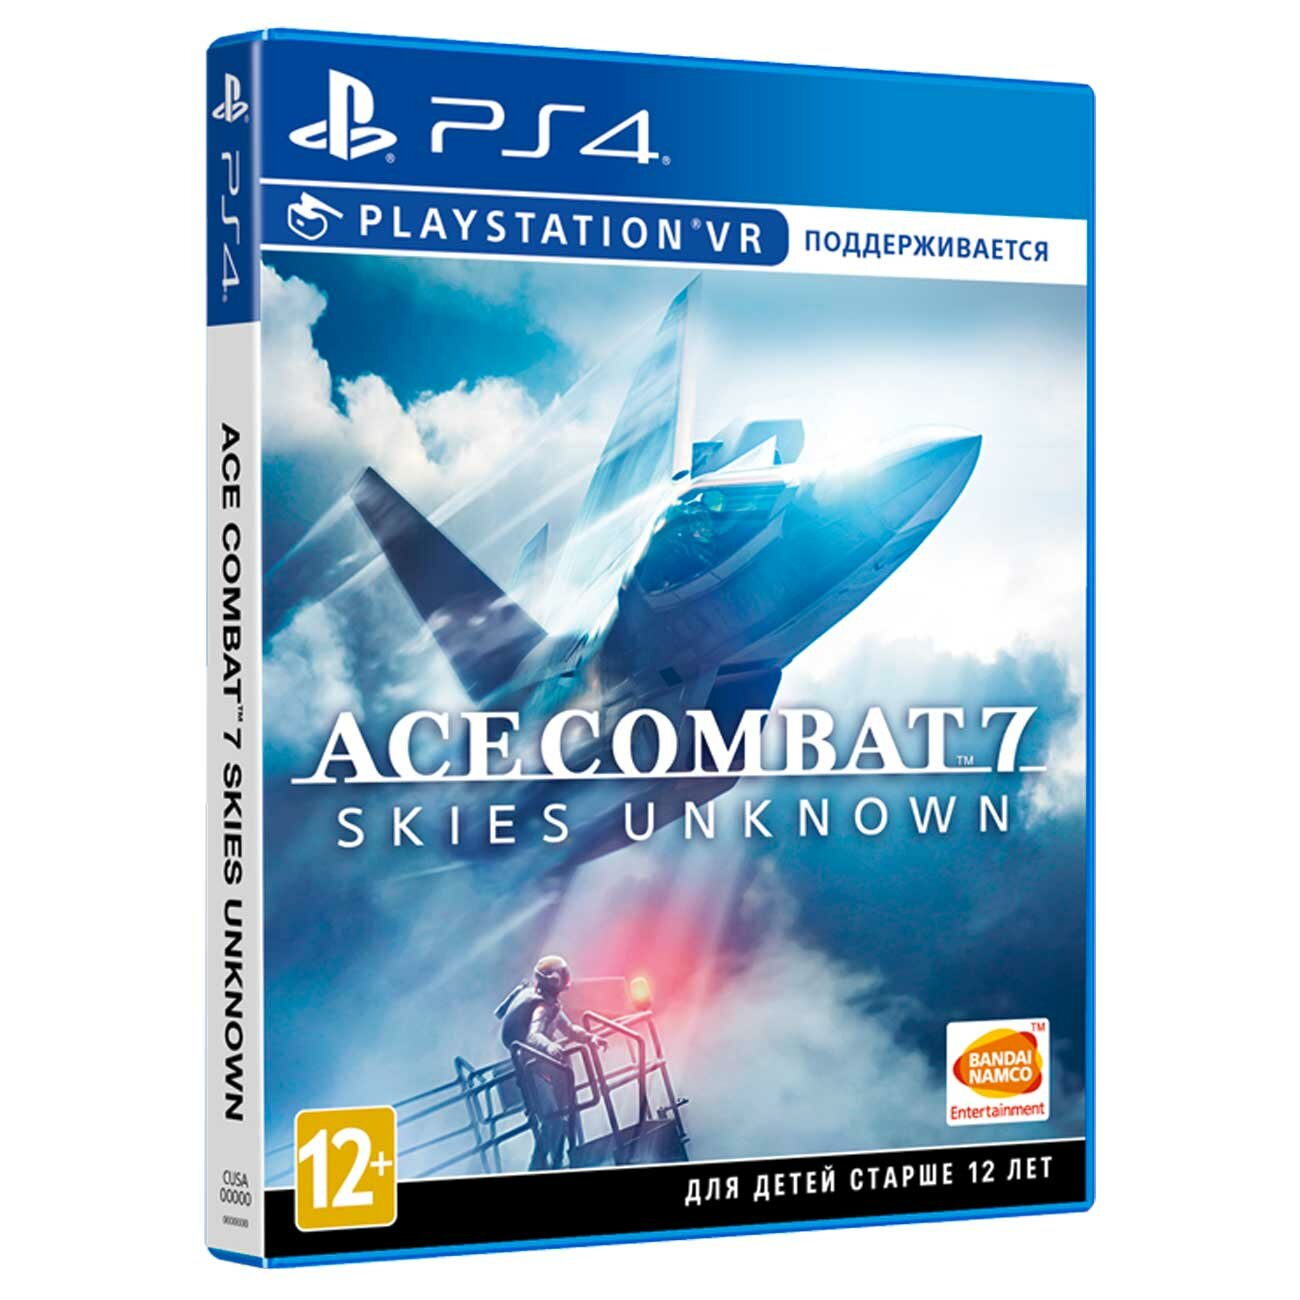 PS4 игра Bandai Namco Ace Combat 7: Skies Unknown